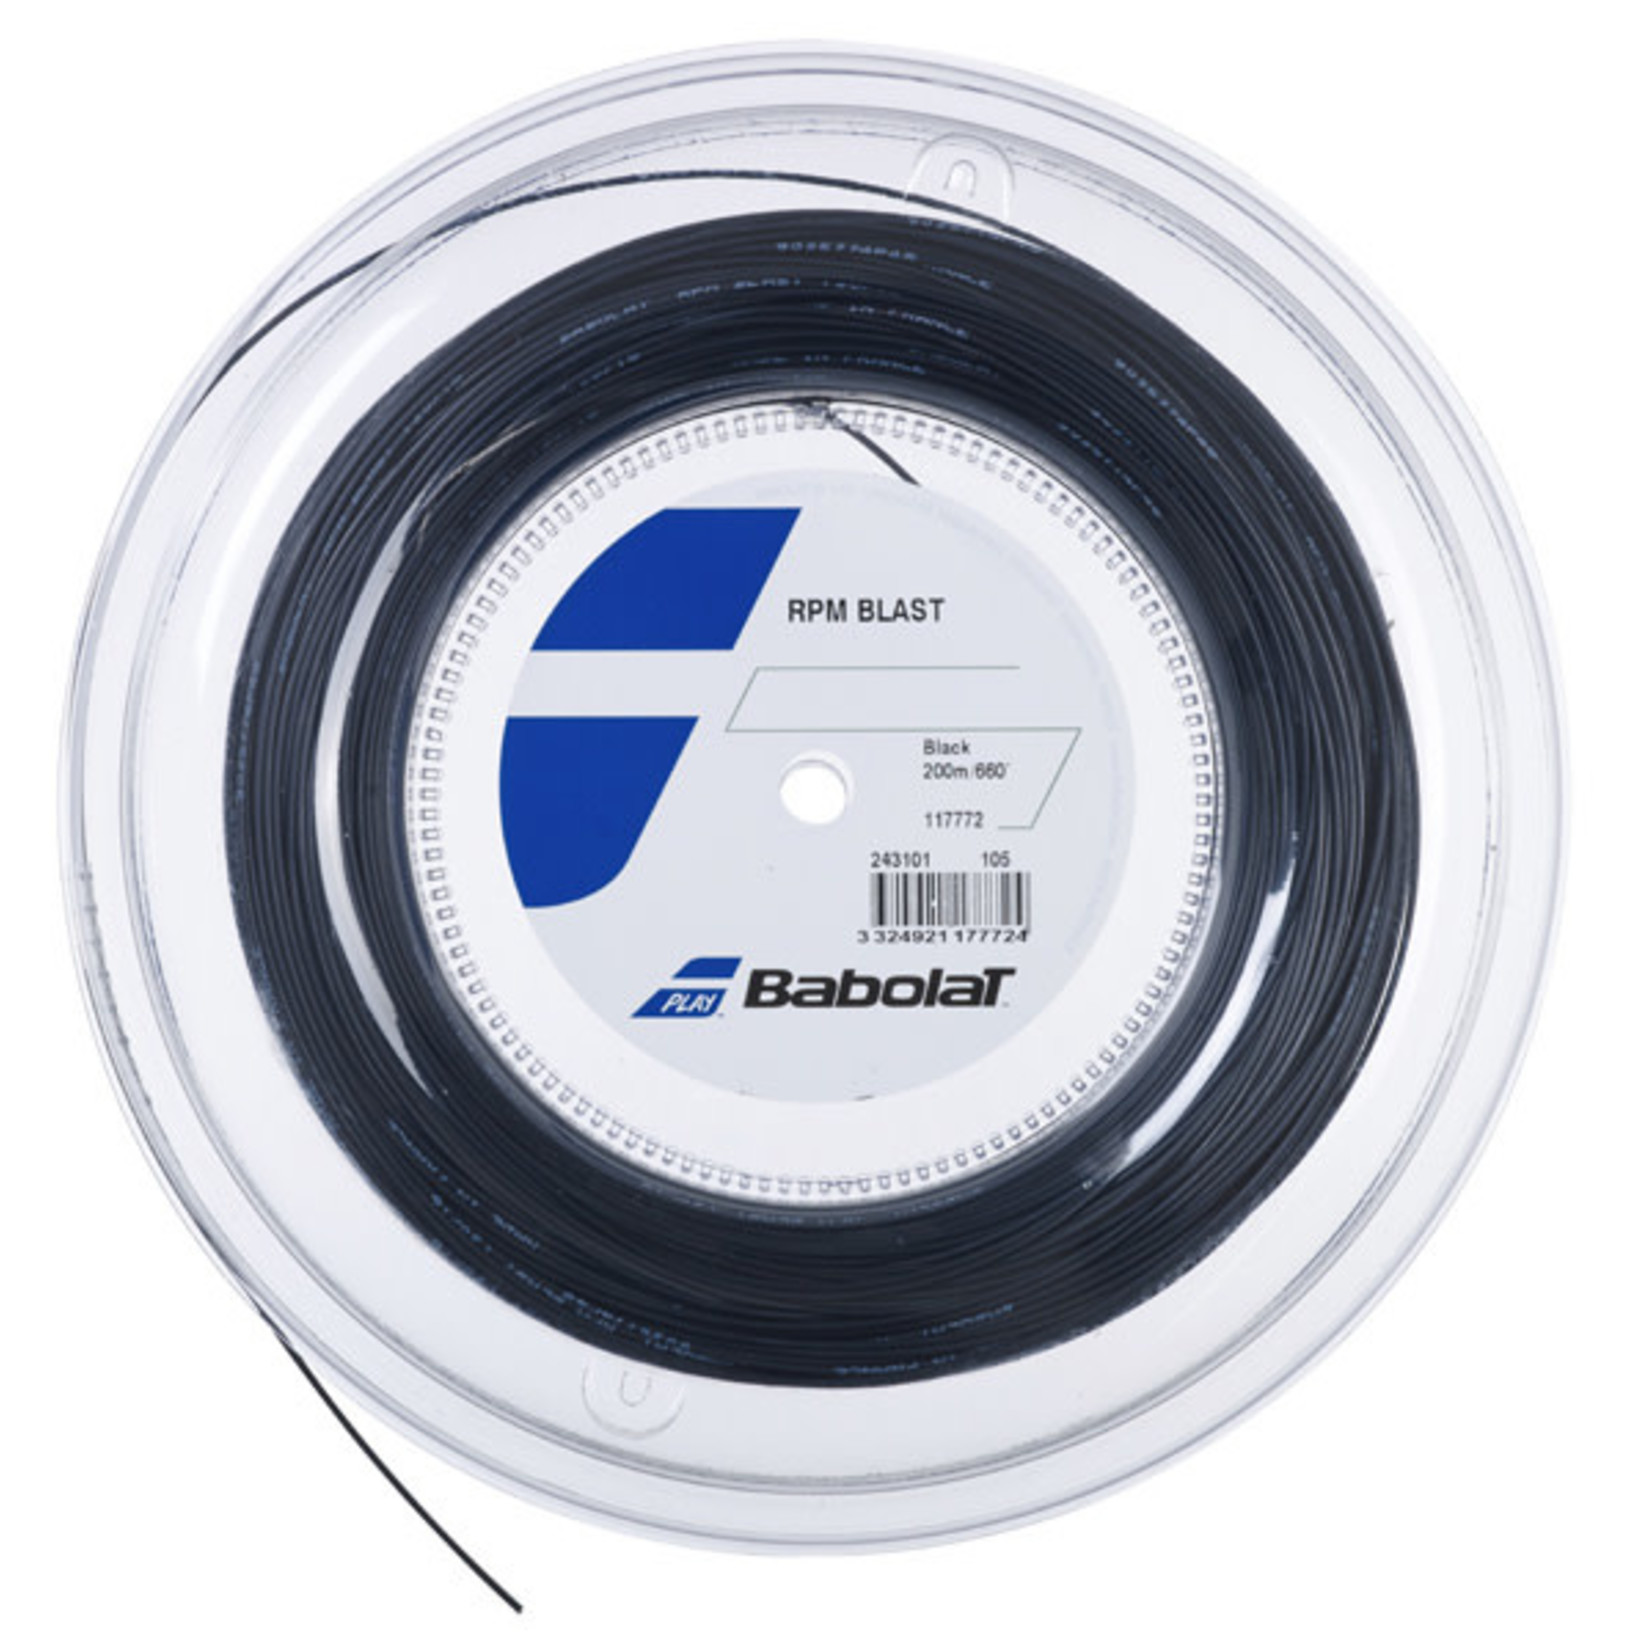 Babolat Babolat RPM Blast Tennis String Reels (200m)